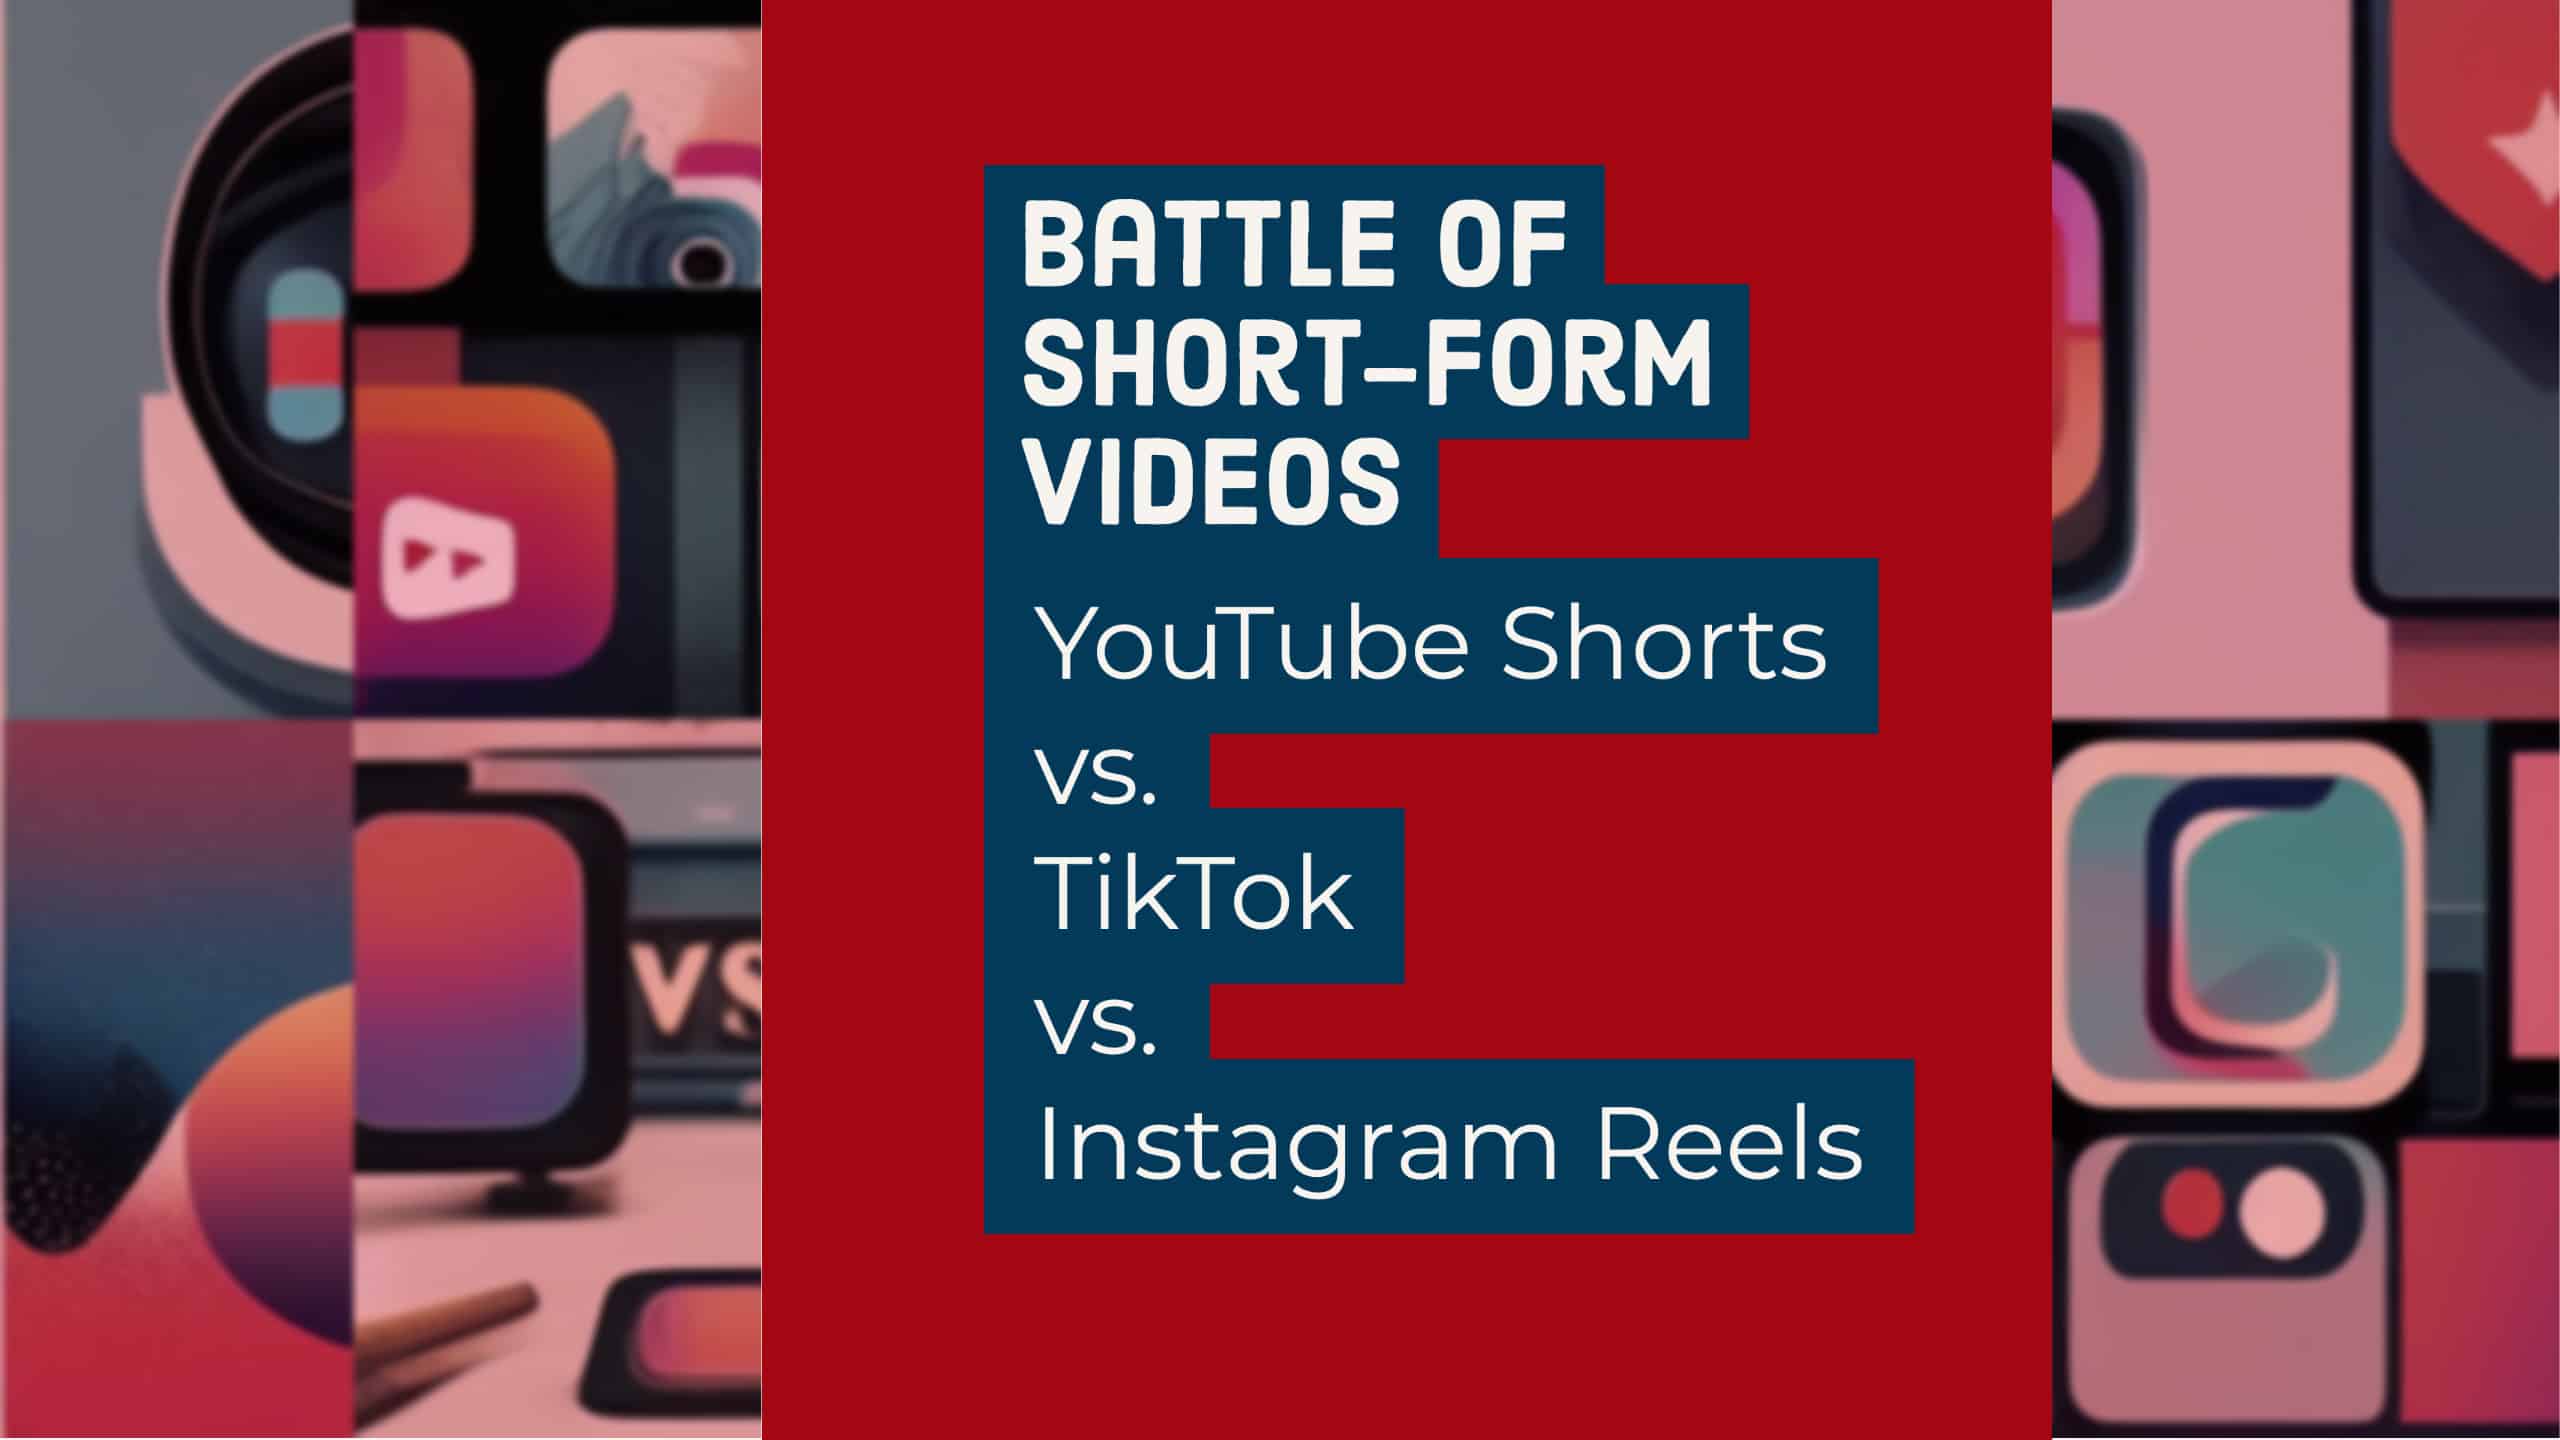 Battle of Short-Form Videos – YouTube Shorts vs TikTok vs Instagram Reels